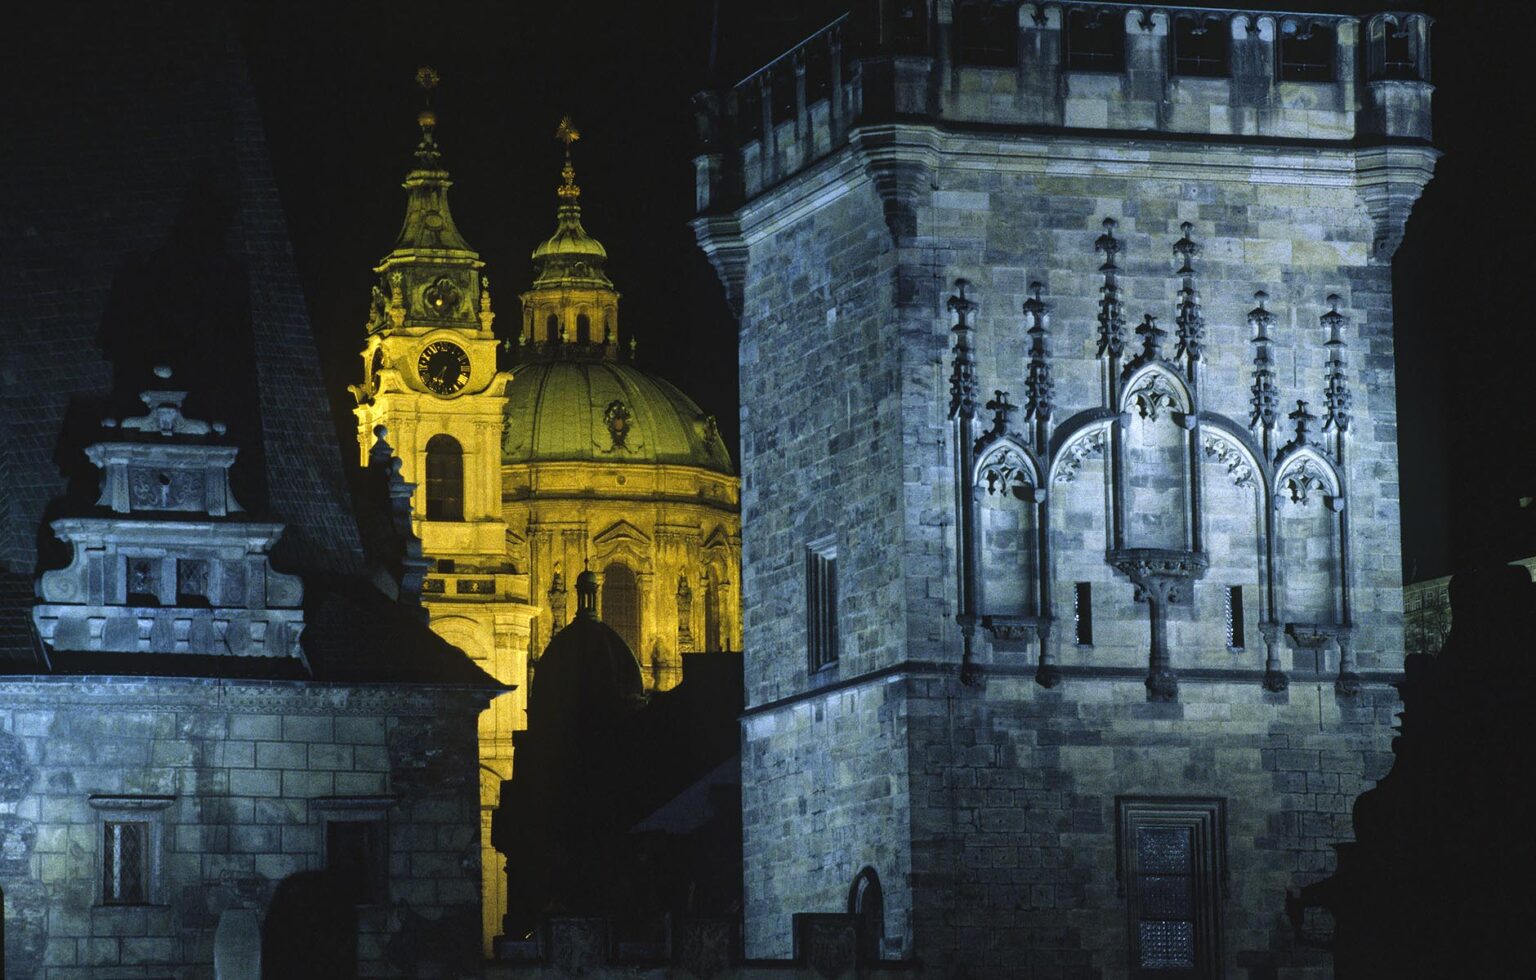 ST. NICHOLAS CHURCH is seen through the TOWER OF CHARLES BRIDGE in historic PRAGUE - CZECH REPUBLIC